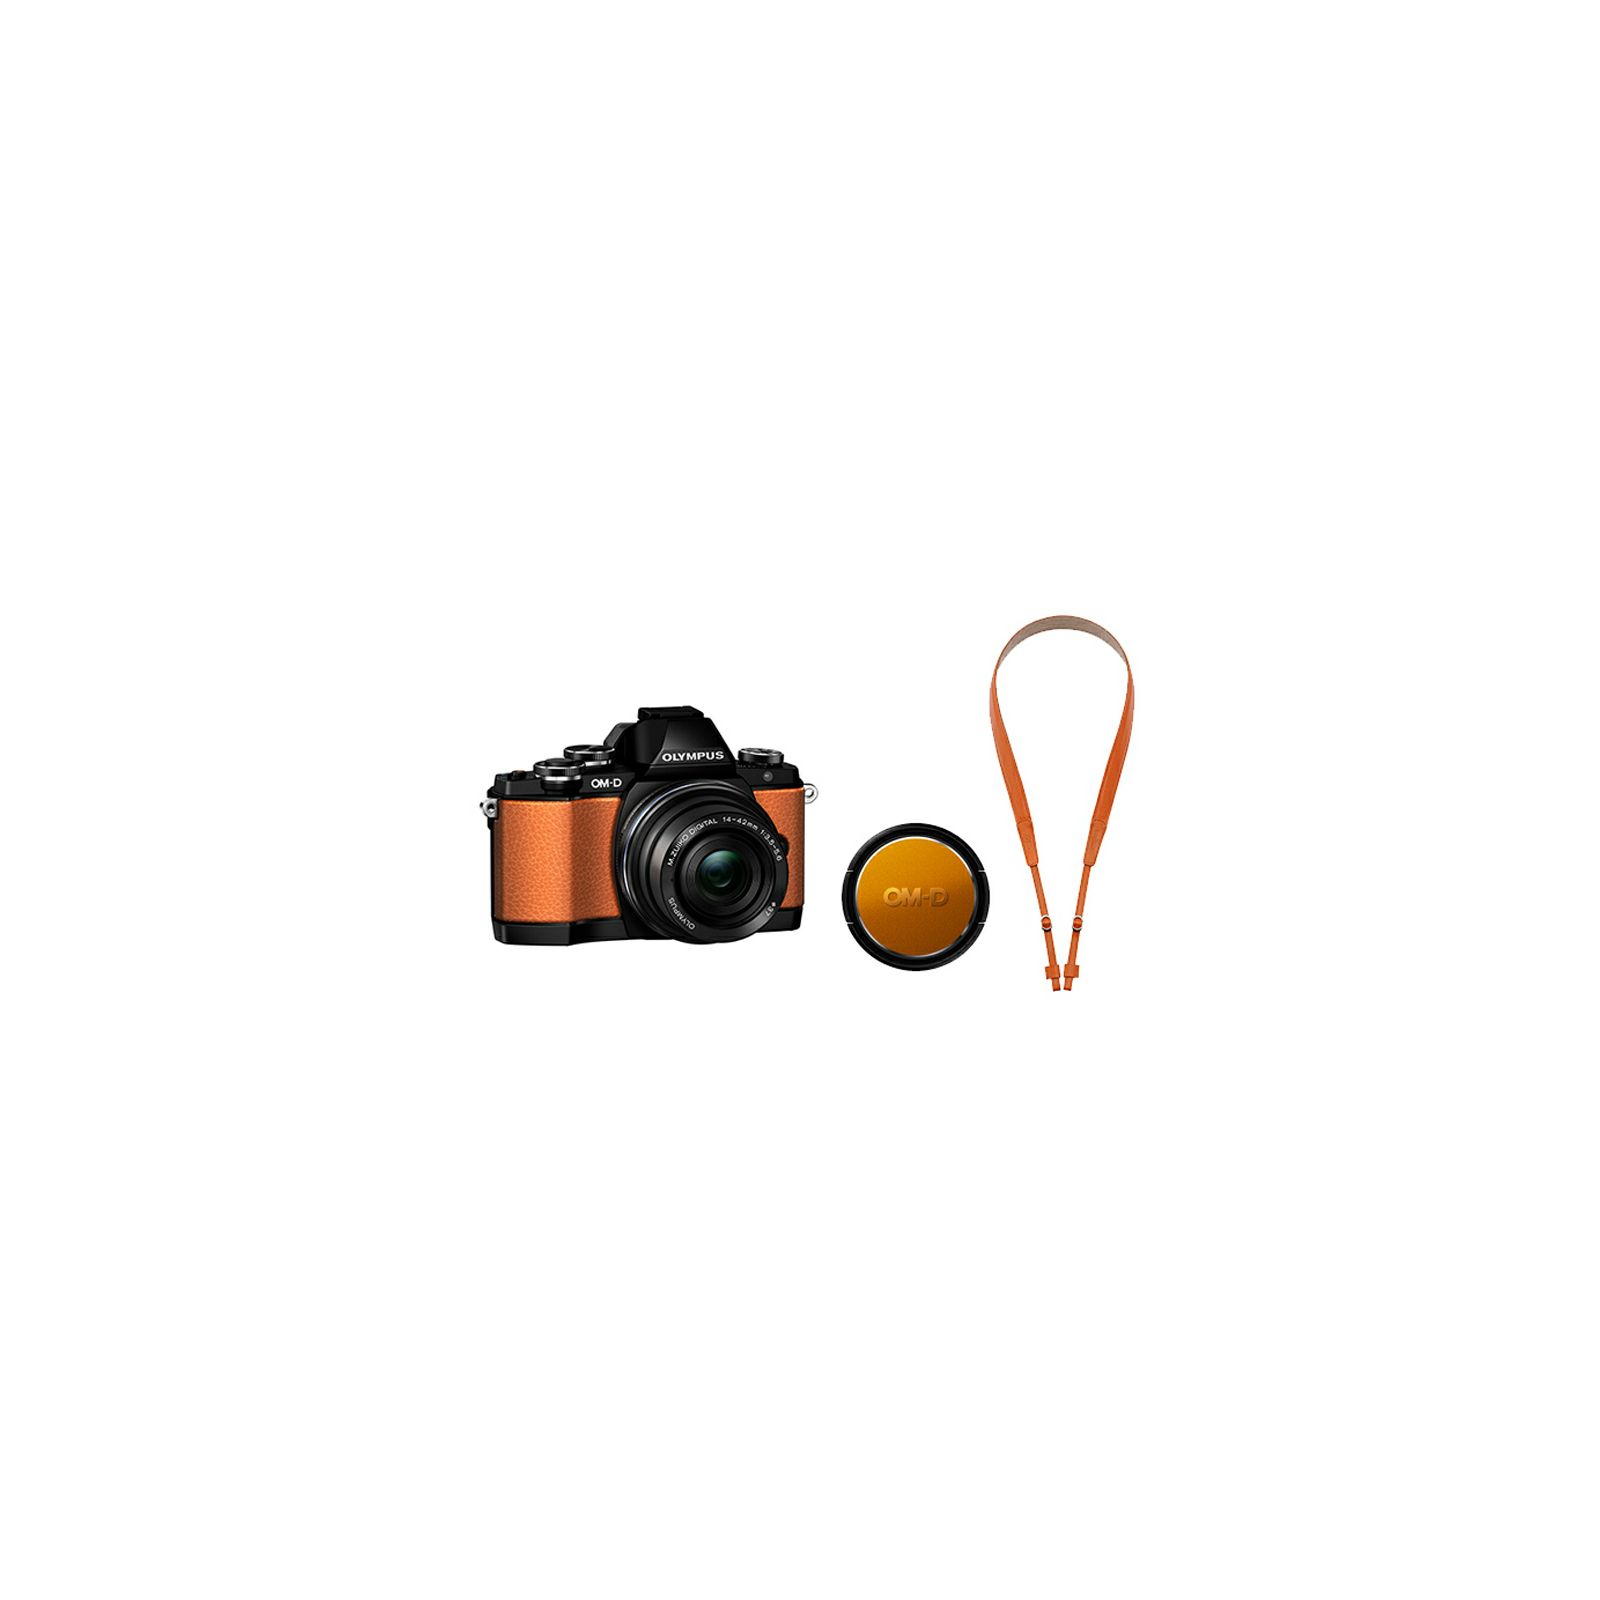 Olympus E-M10 Limited Edition Kit orange/orange / E-M10 black + EZ-M1442EZ black incl. Charger & Battery, lens cap & strap Micro Four Thirds MFT - OM-D Camera digitalni fotoaparat V207026OE000